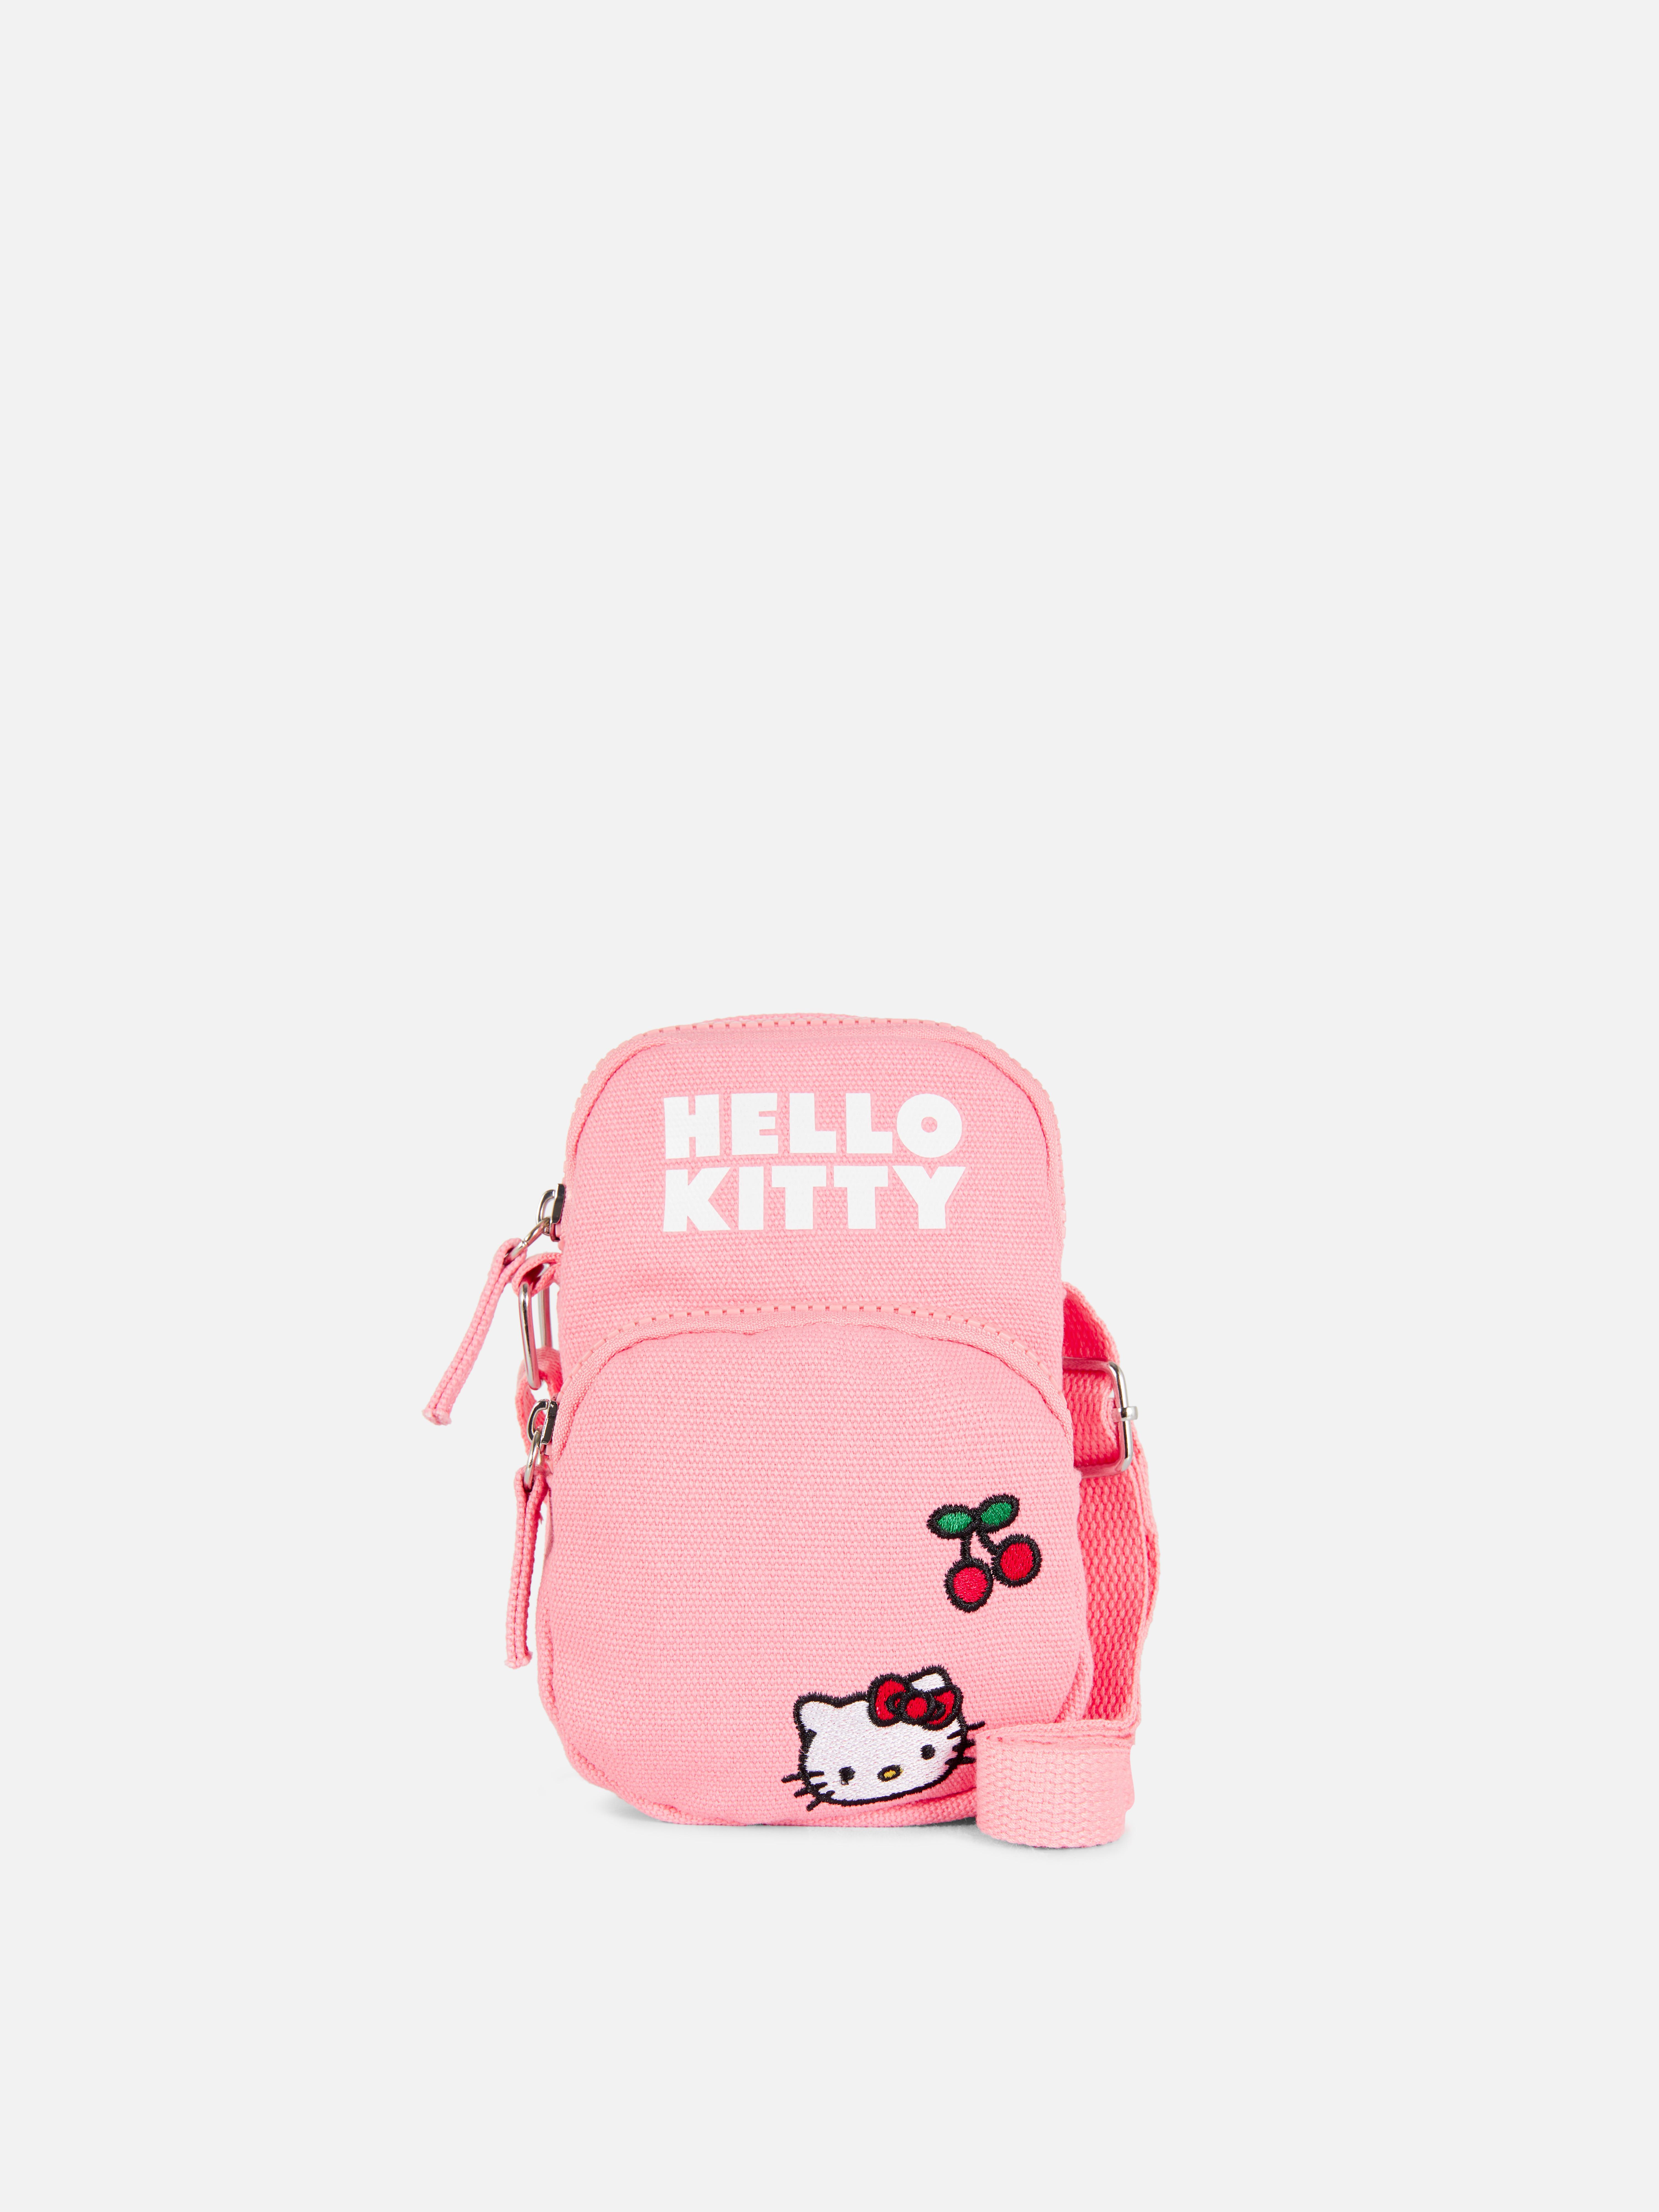 Hello Kitty Phone Holder Bag